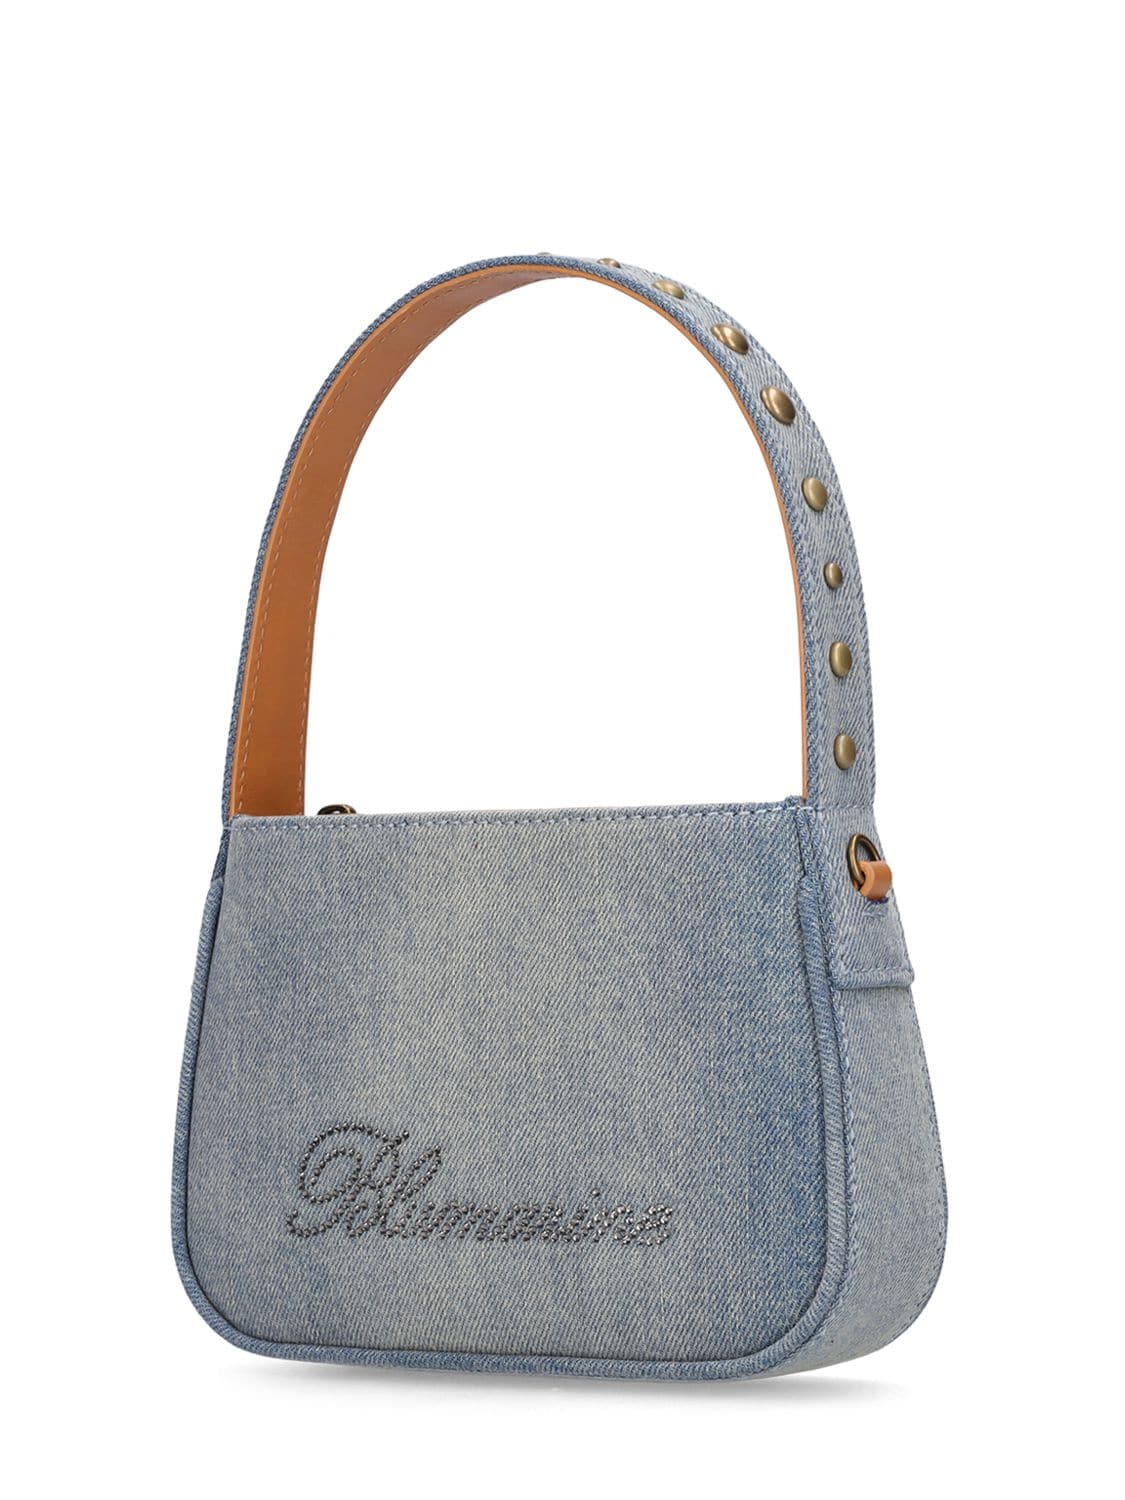 Blumarine Small Cargo Bag with Pockets